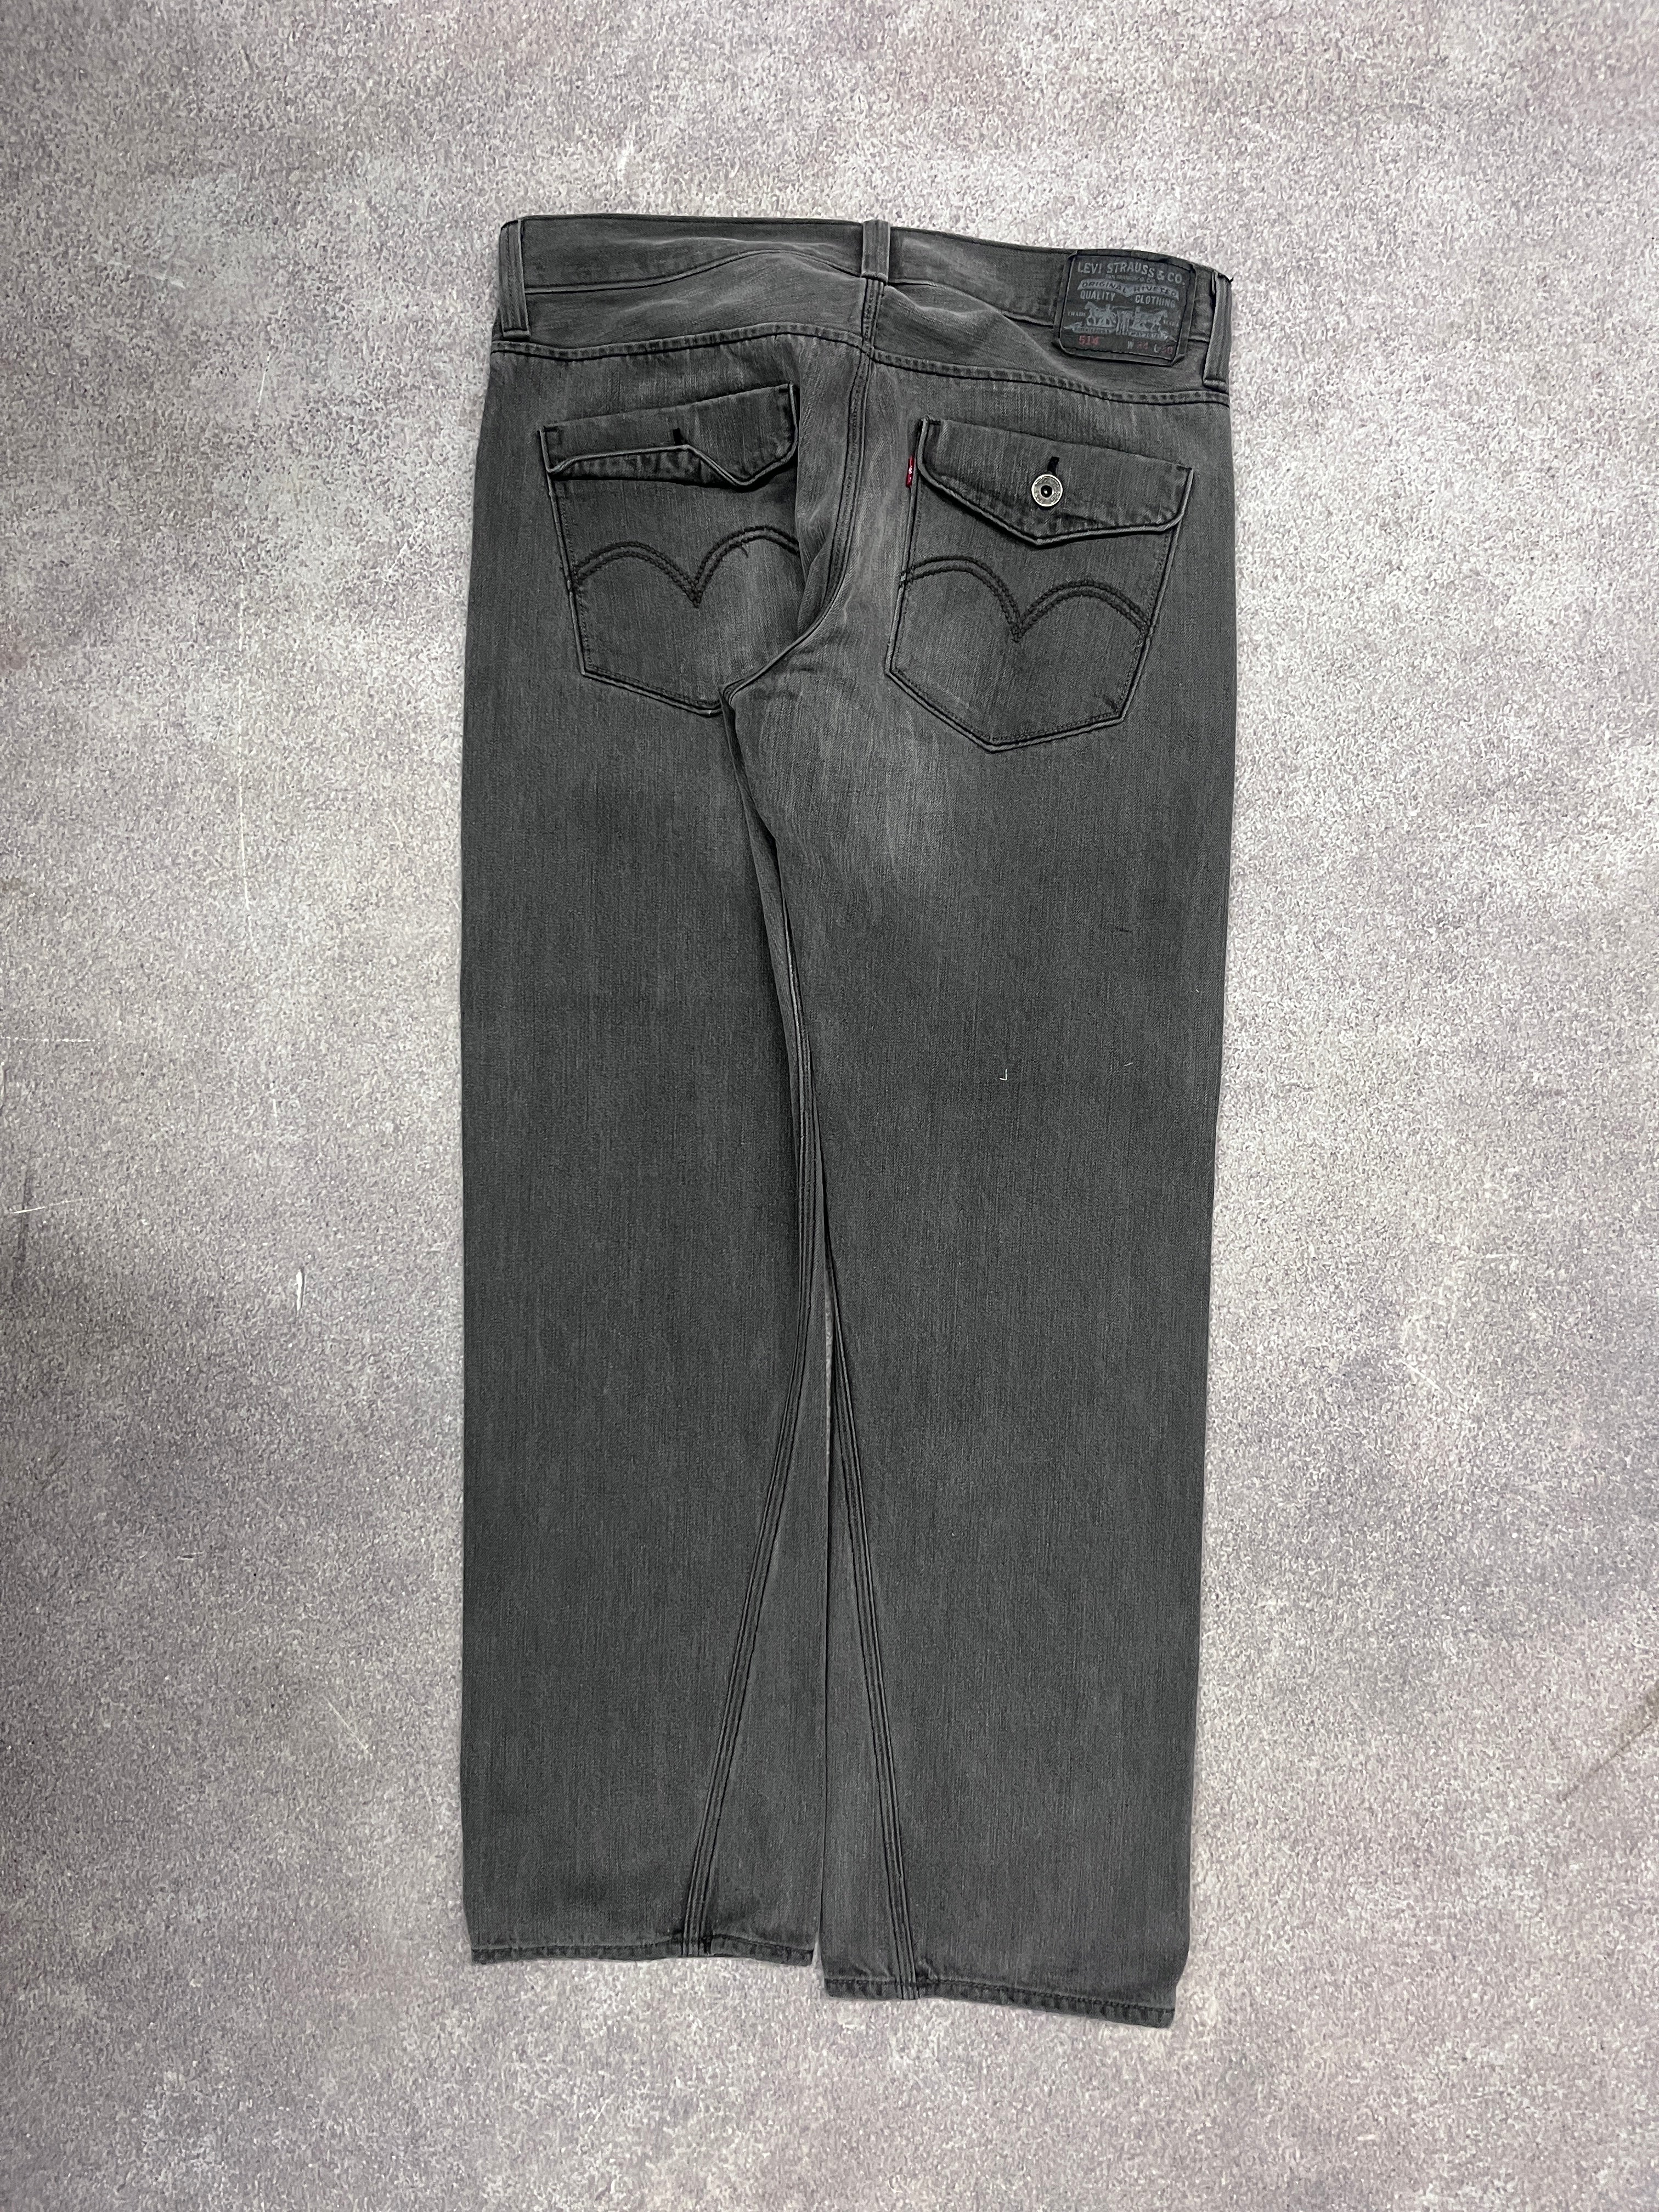 Vintage Levi 514 Denim Jeans Grey // W34 L30 - RHAGHOUSE VINTAGE